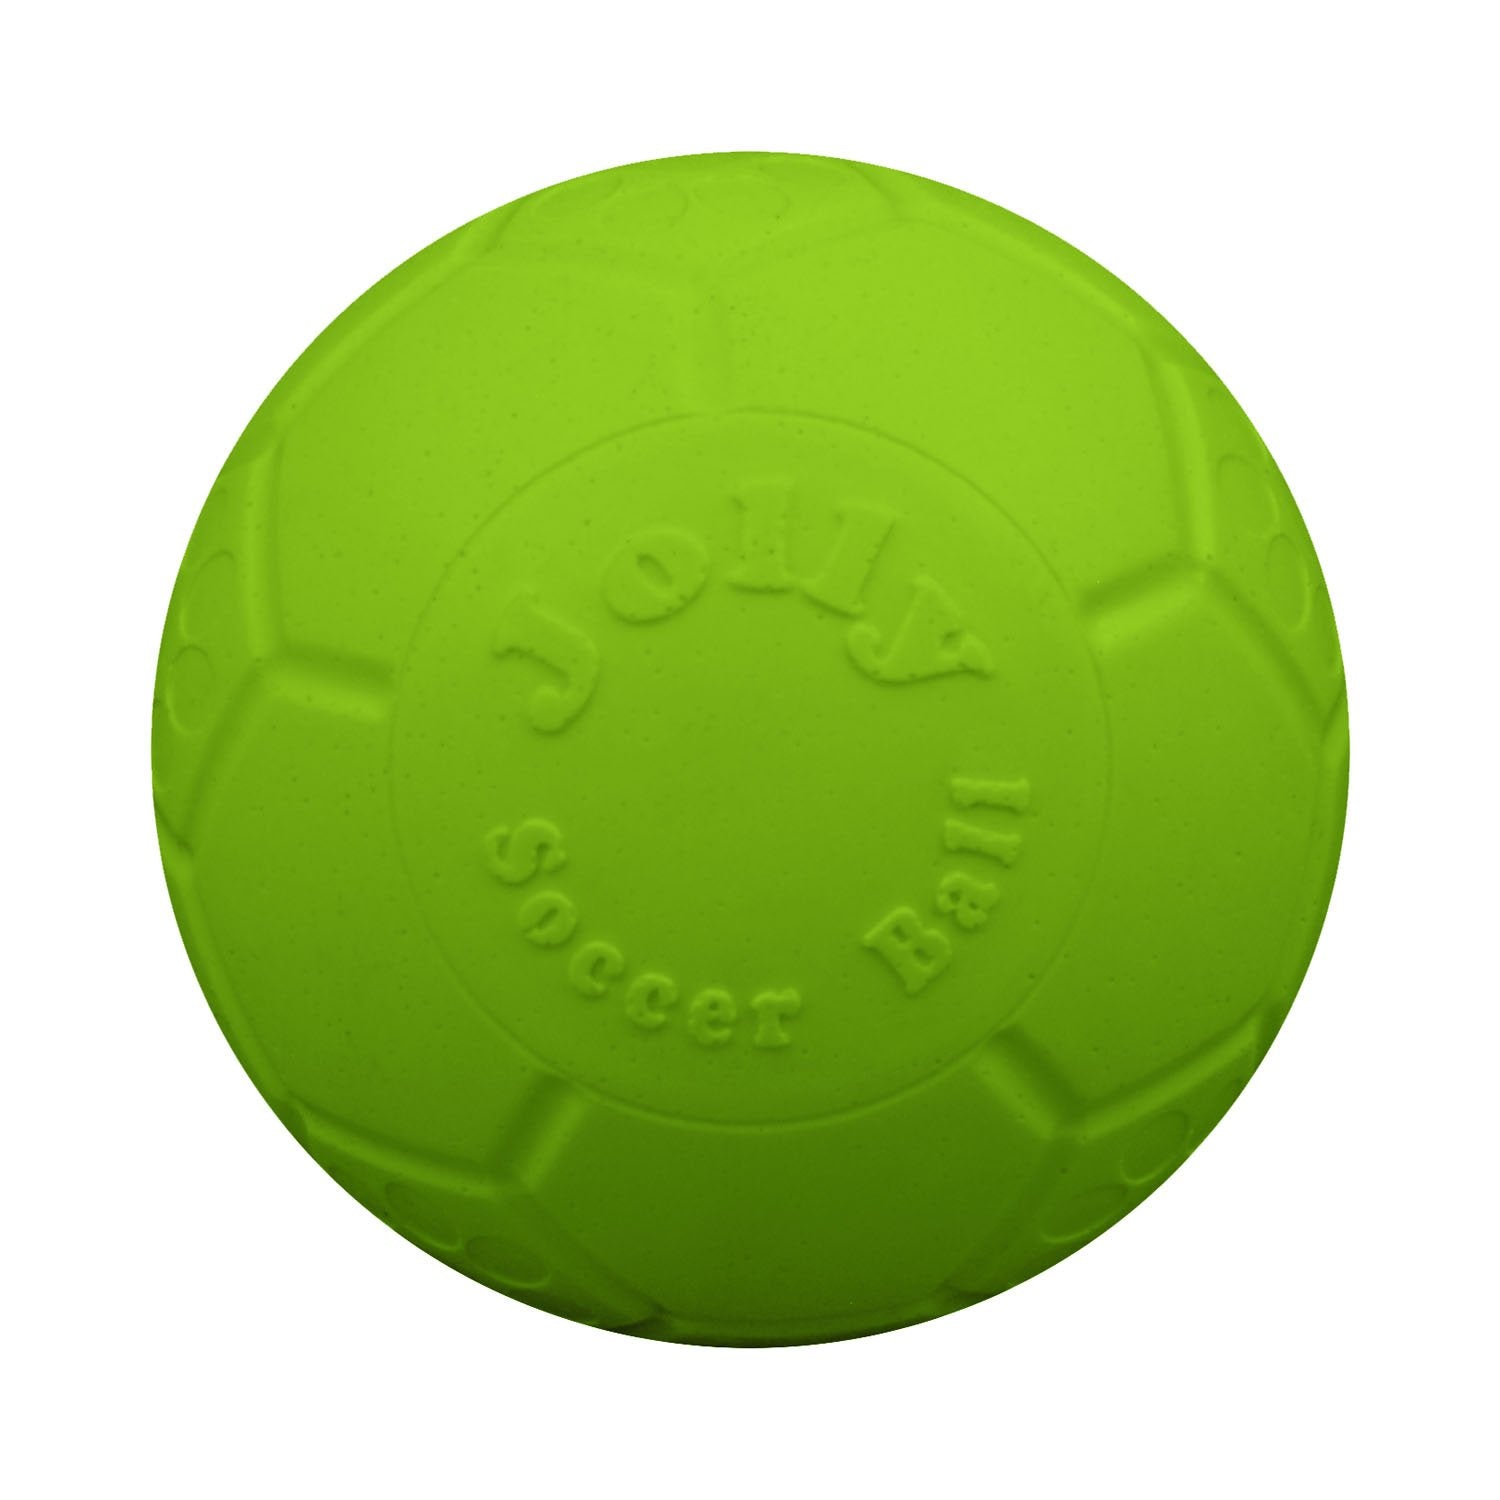 Soccer Ball for Dogs - 6 INCH Herding Balls for Dogs with Bells - Medium